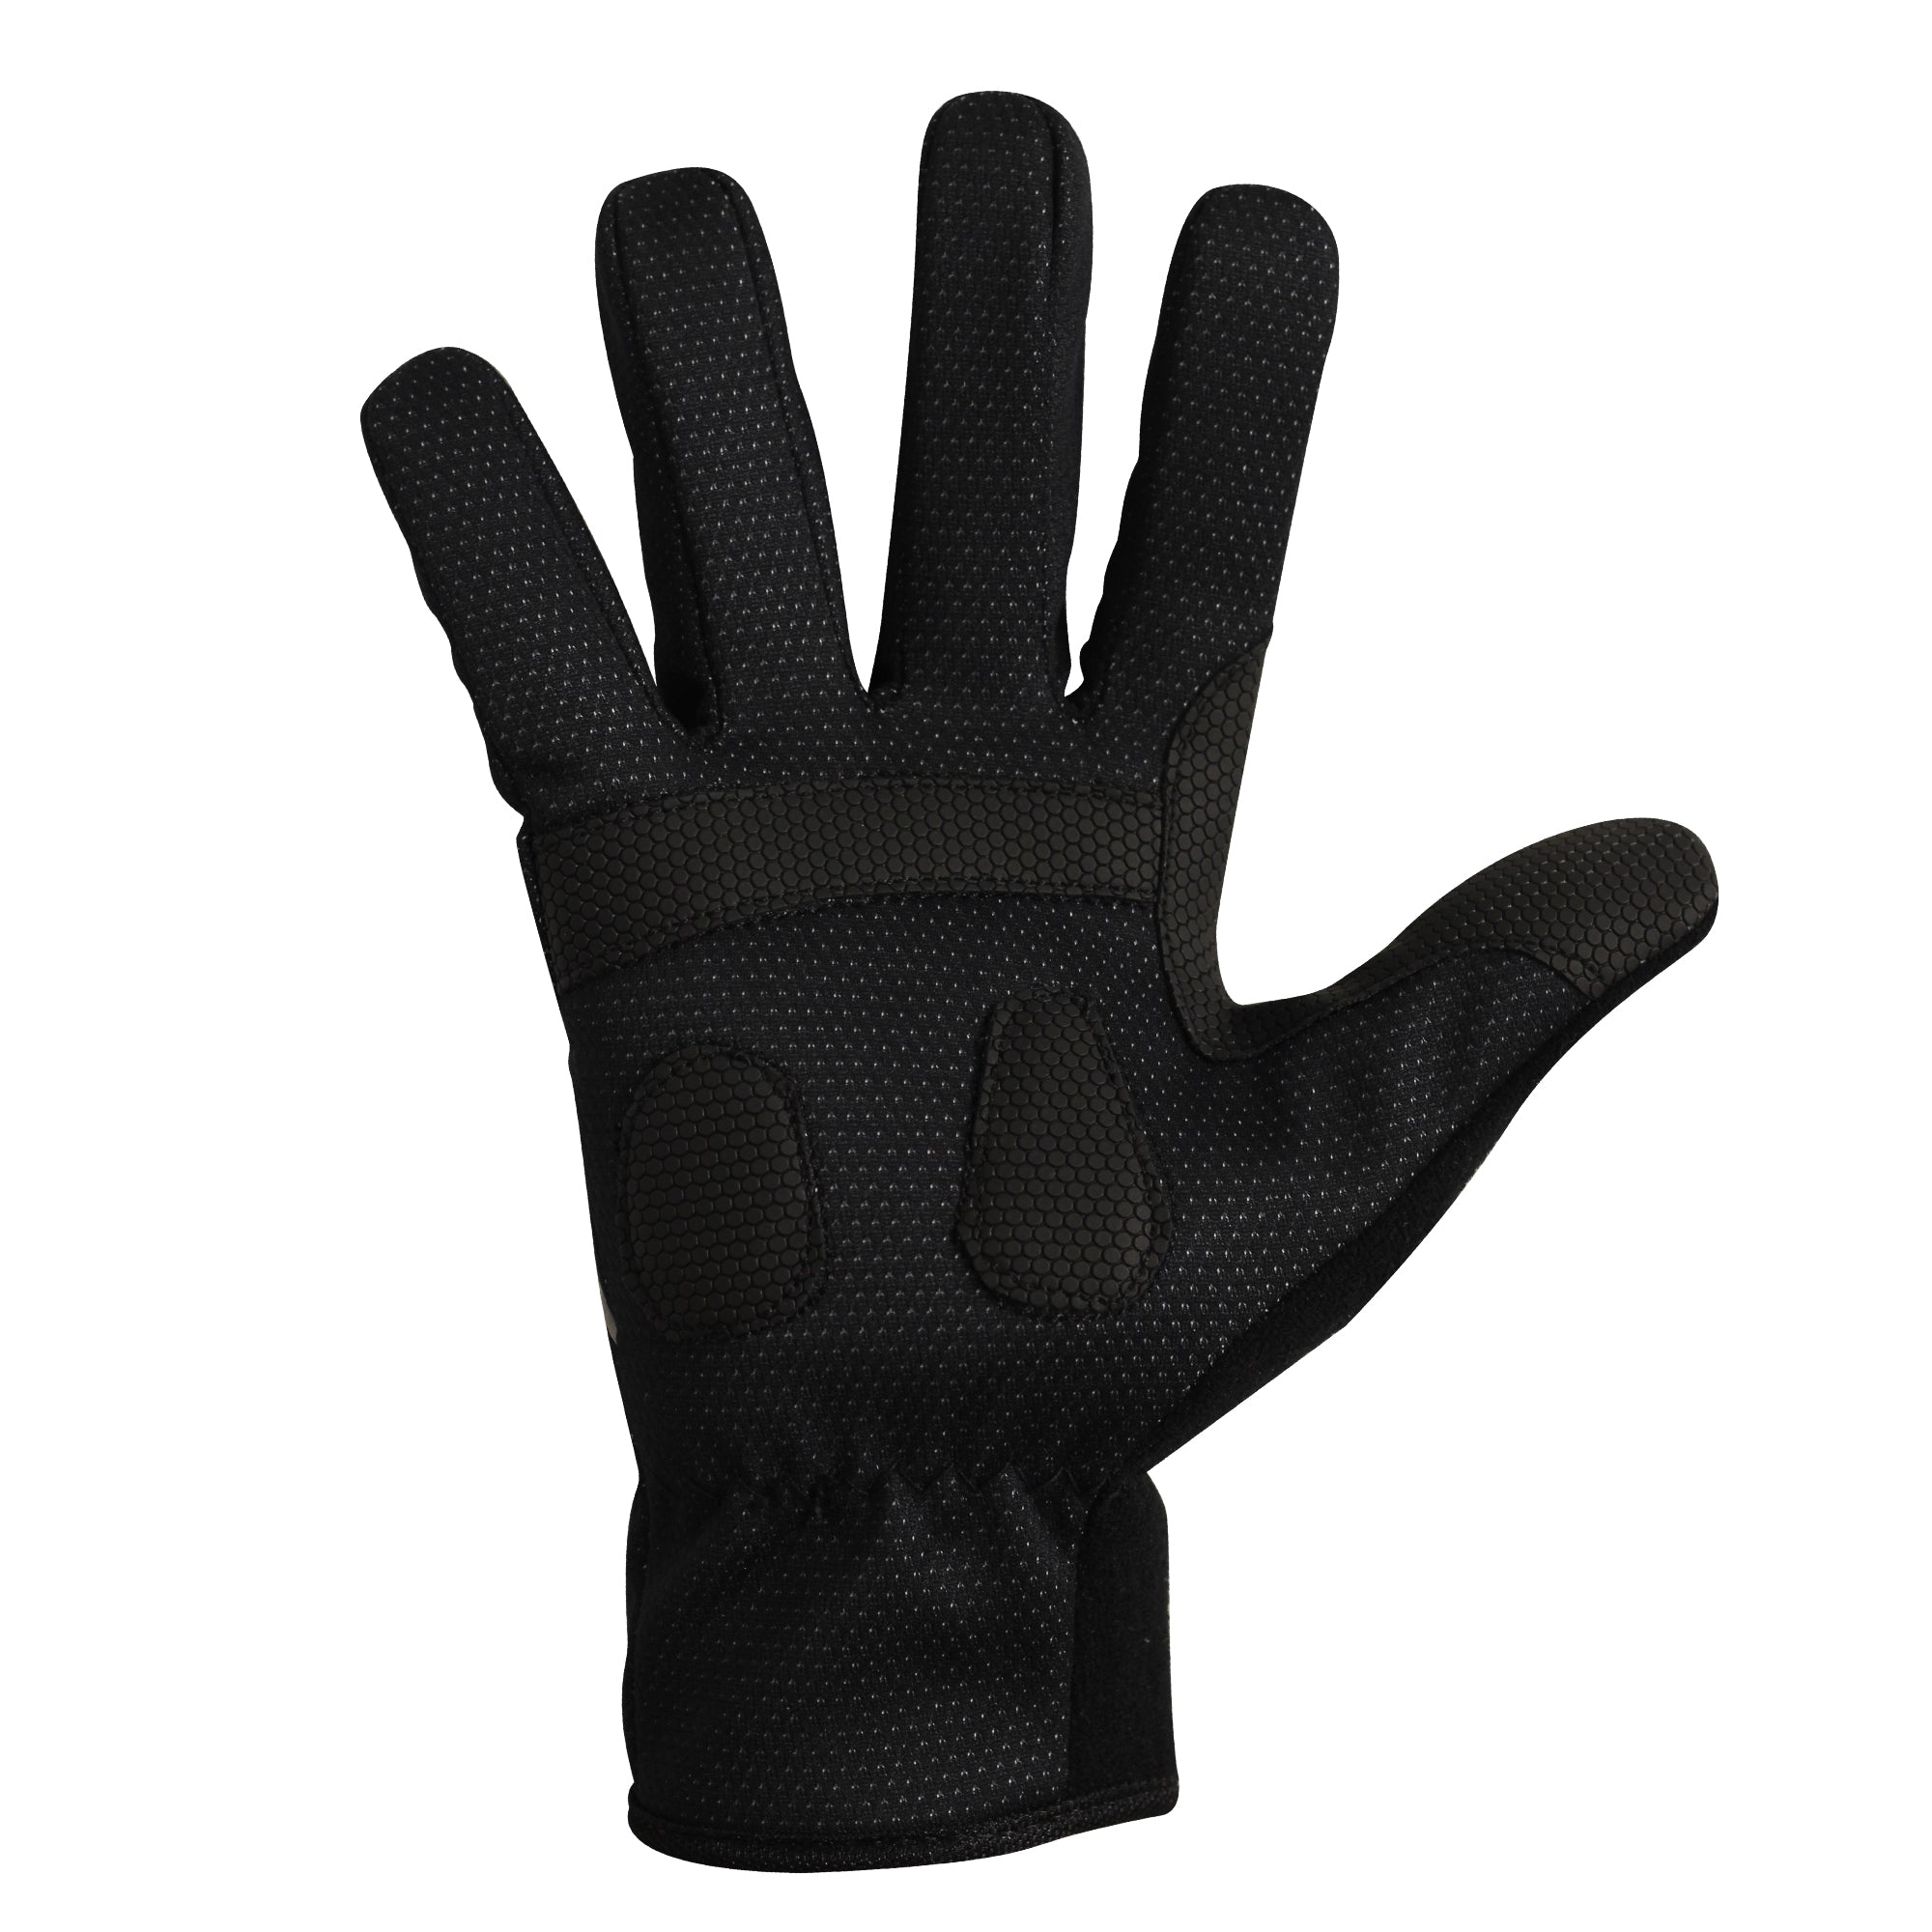 Hawkley Autumn Winter Cycling Gloves - Optimum